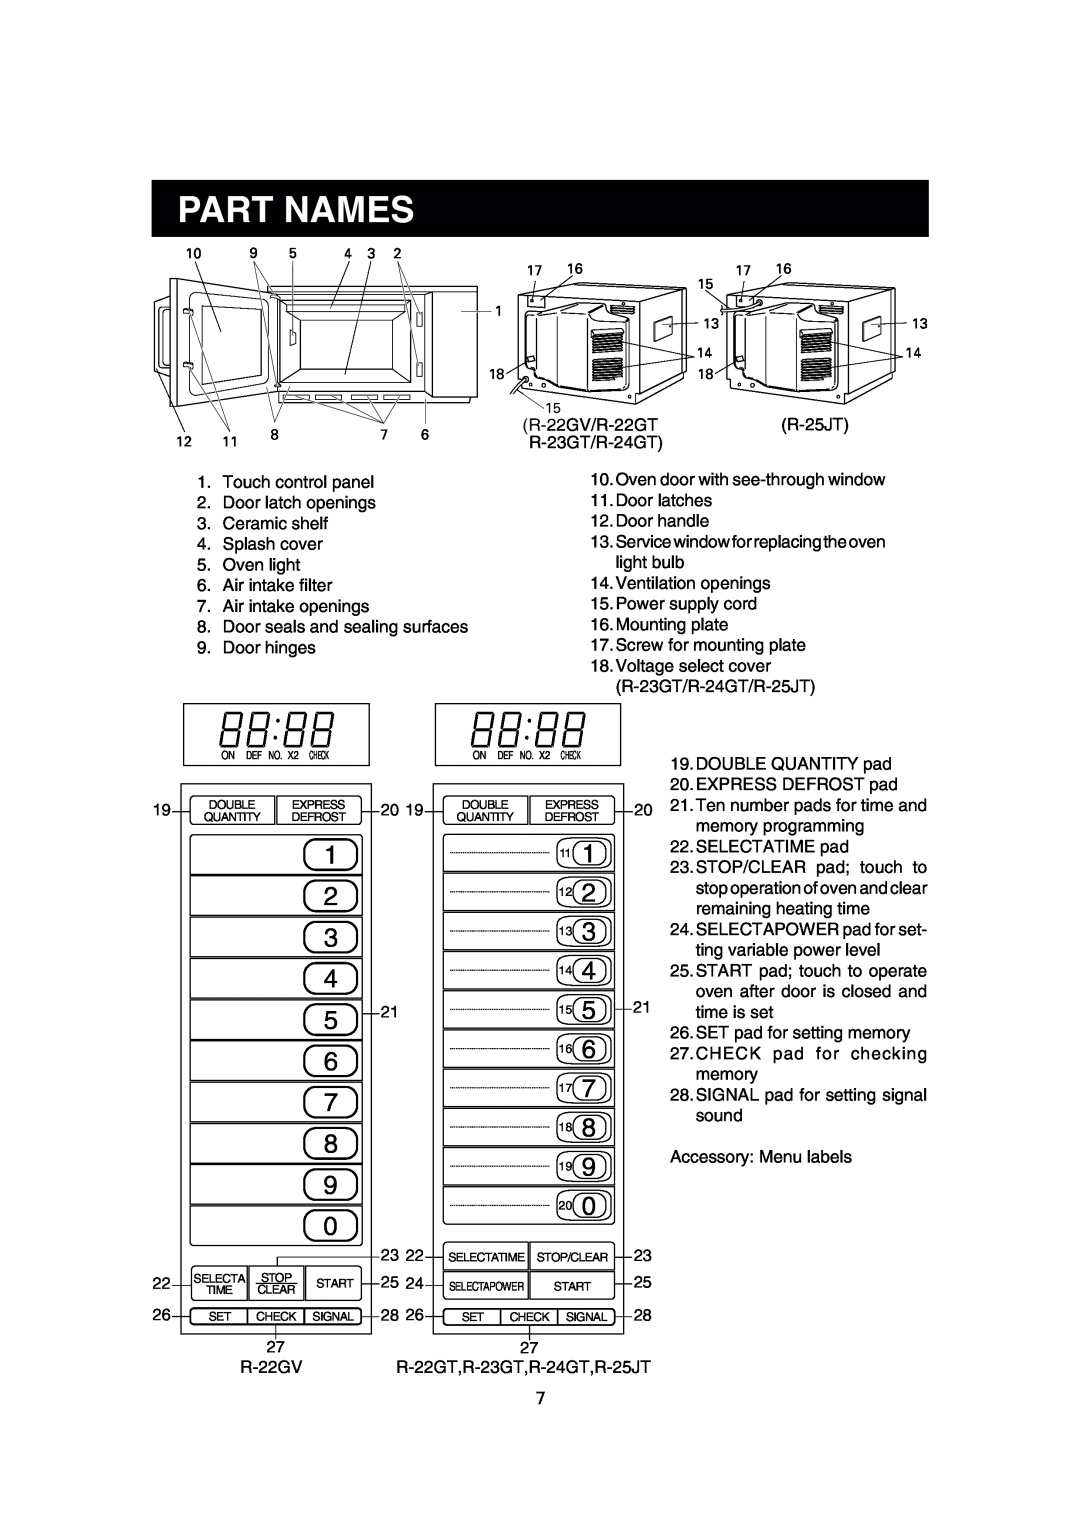 Sharp R-22GT, R-24GT, R-25JT, R-23GT operation manual Part Names 